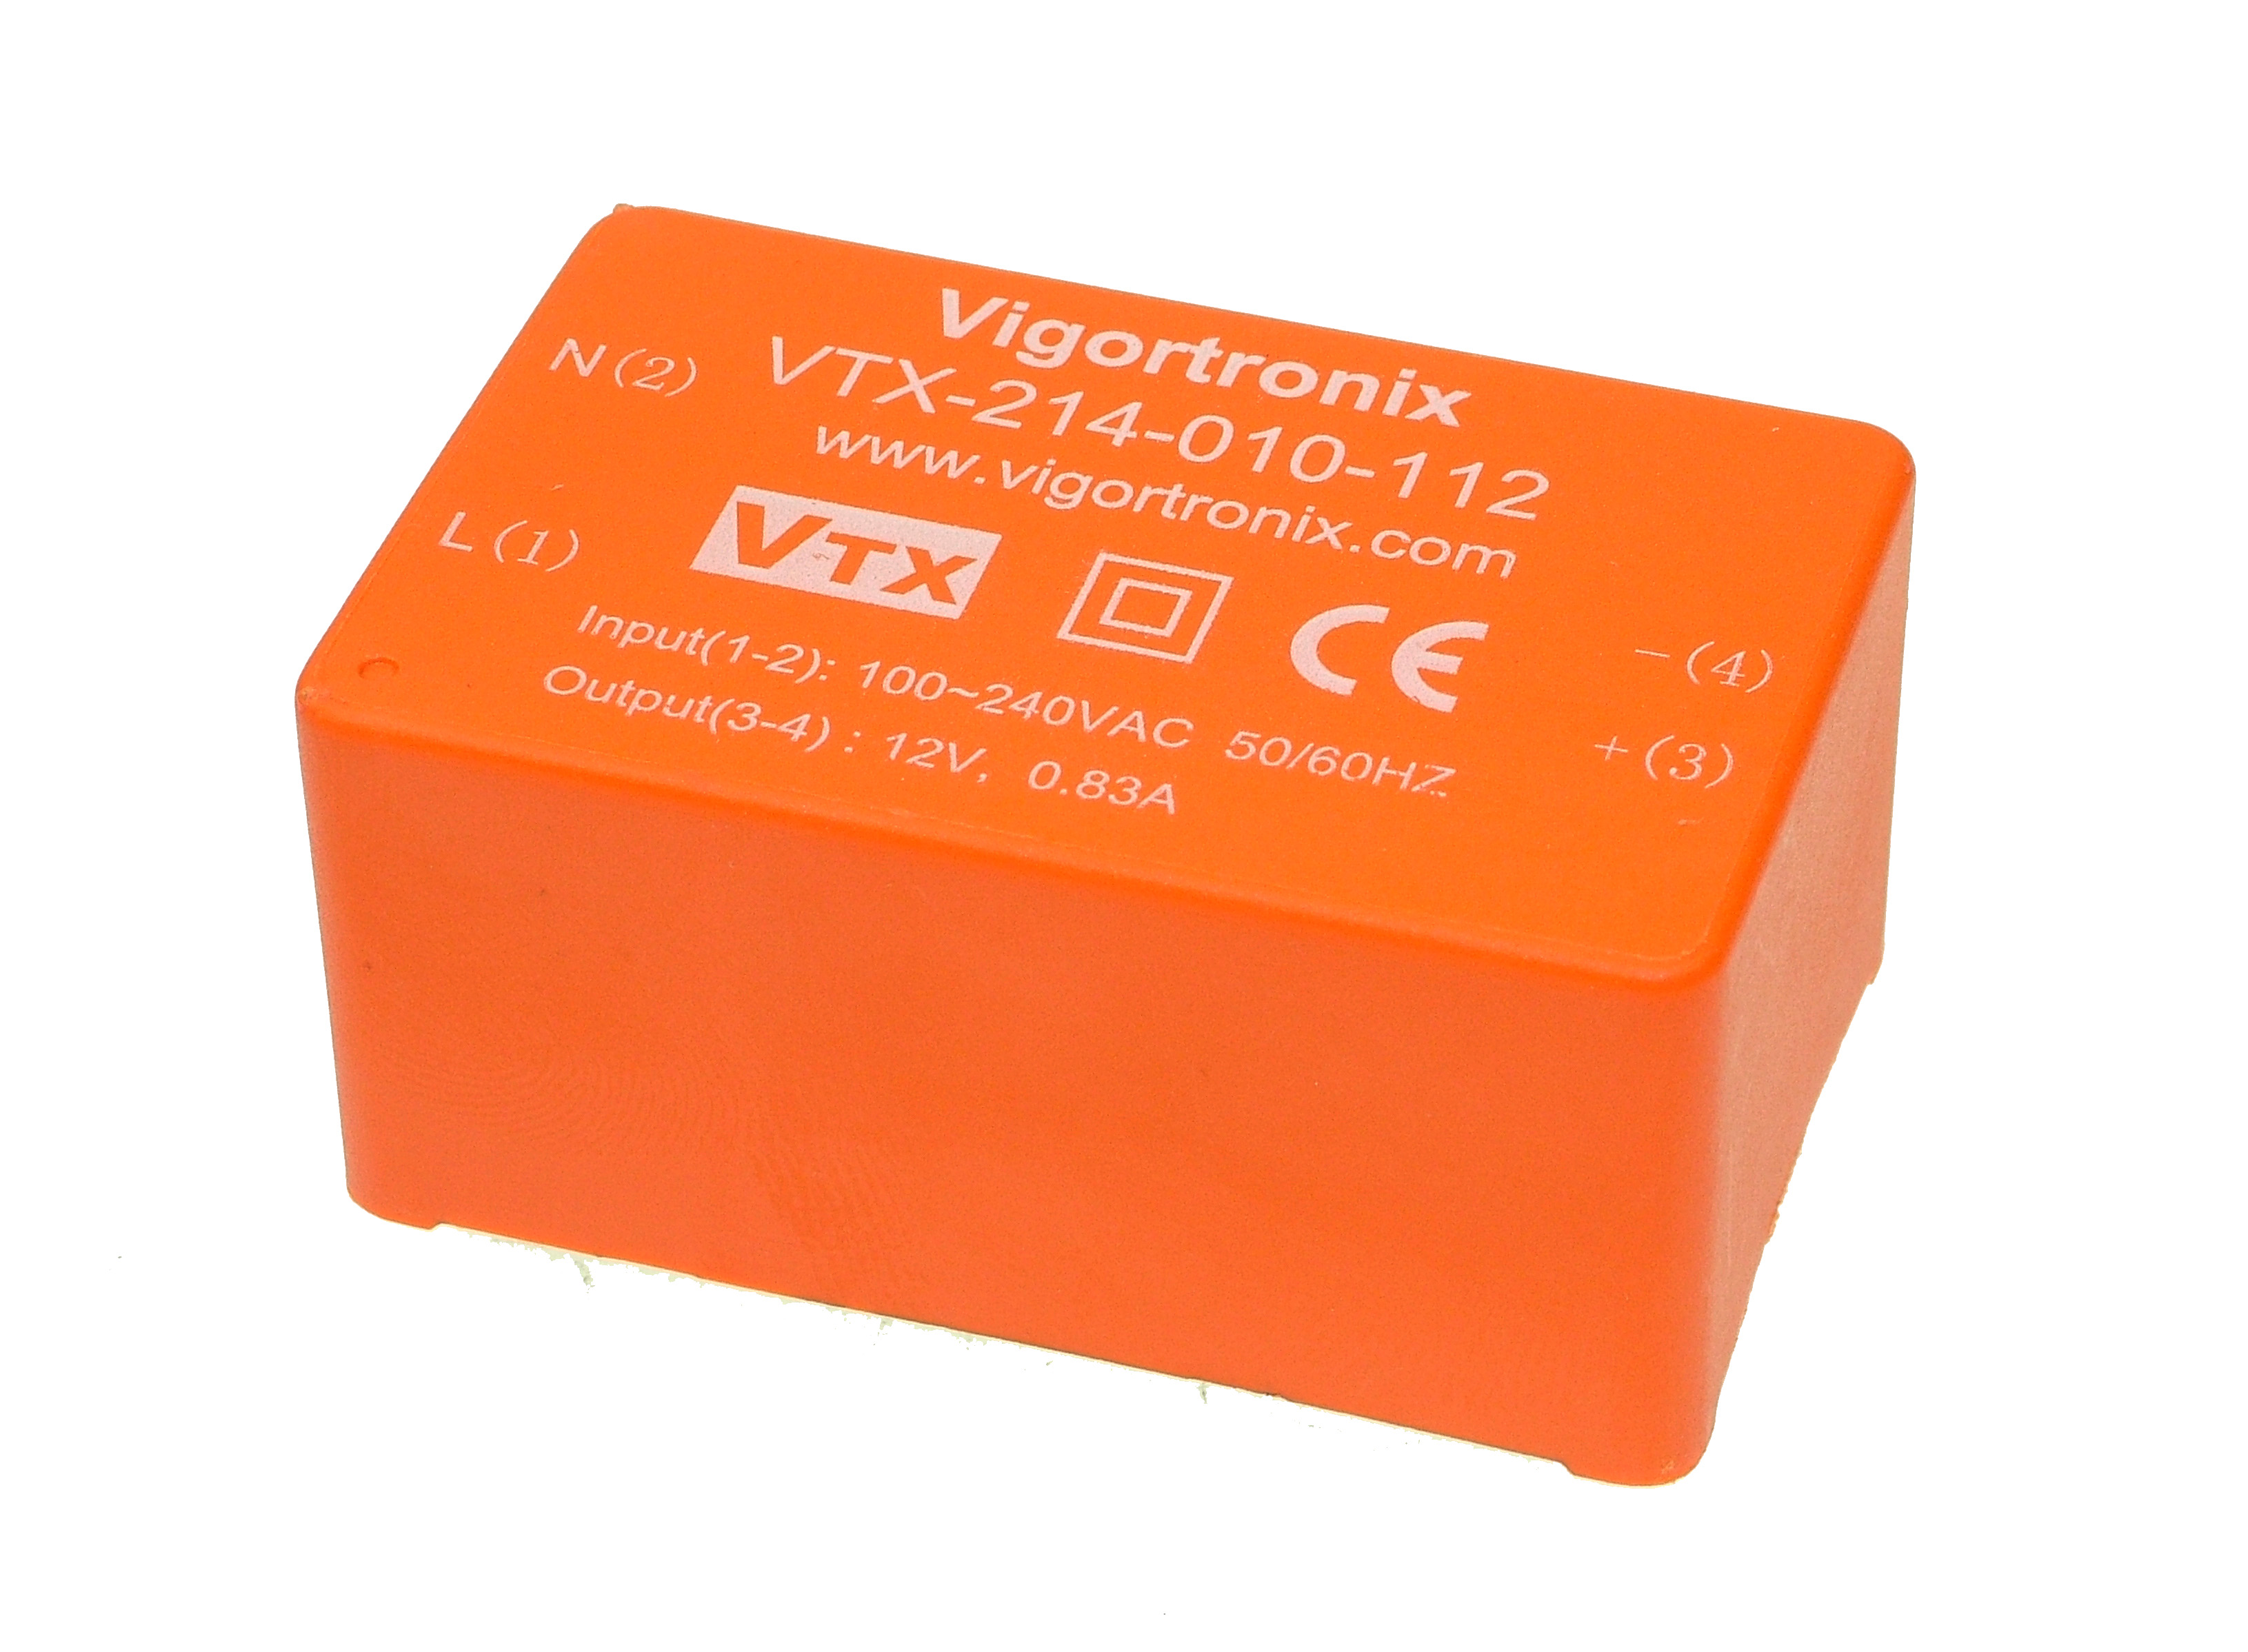 Vigortronix VTX-214-010-1 AC-DC Converter 10 Watt